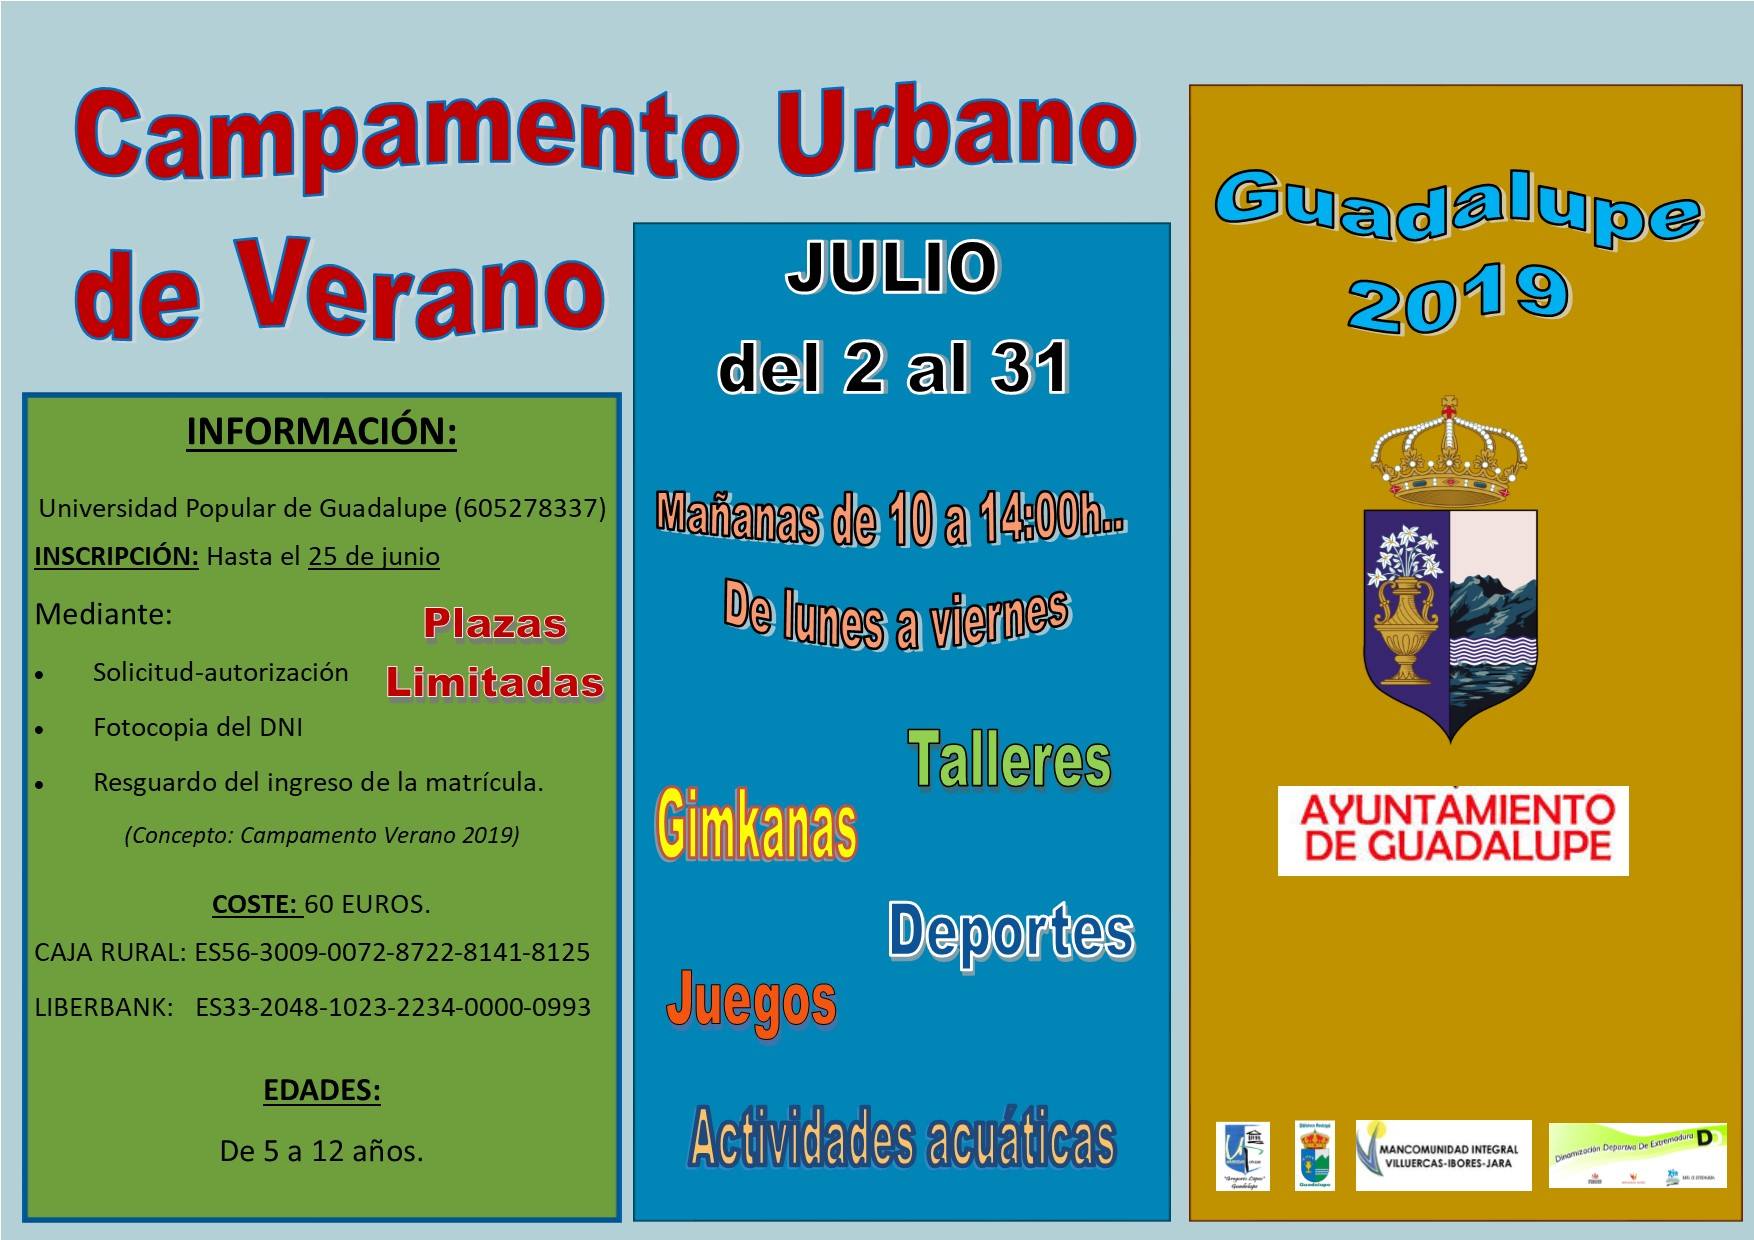 Campamento urbano de verano 2019 - Guadalupe (Cáceres)